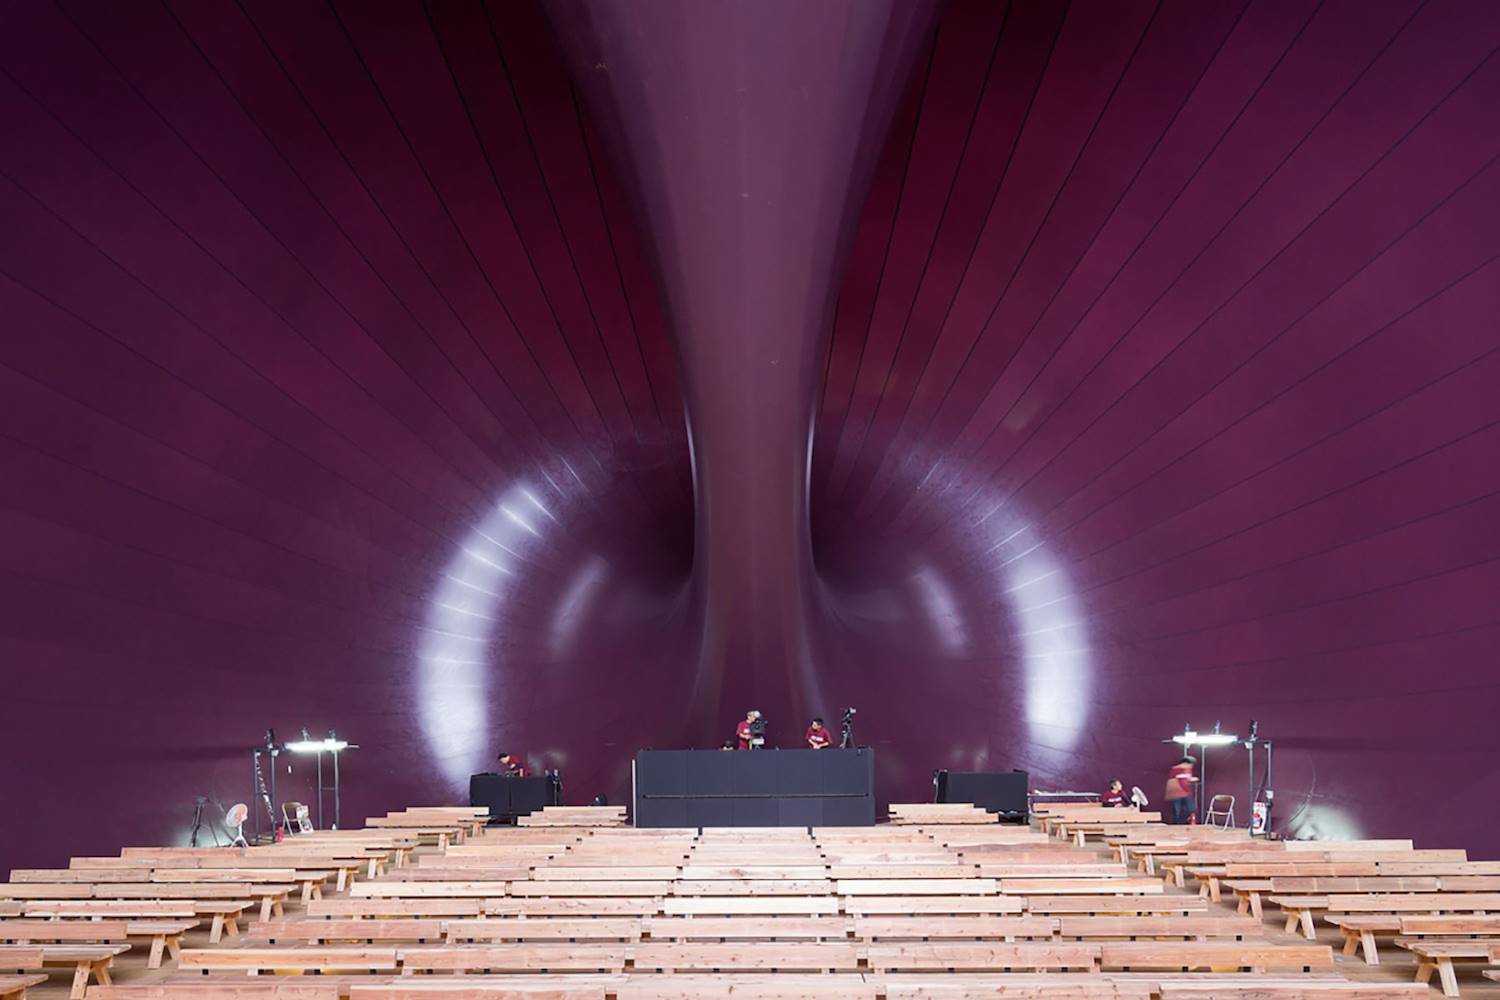 2013 Lucerne Festival Auditorio inflable Miyagi Arata Isozaki premio Pritzker 2019